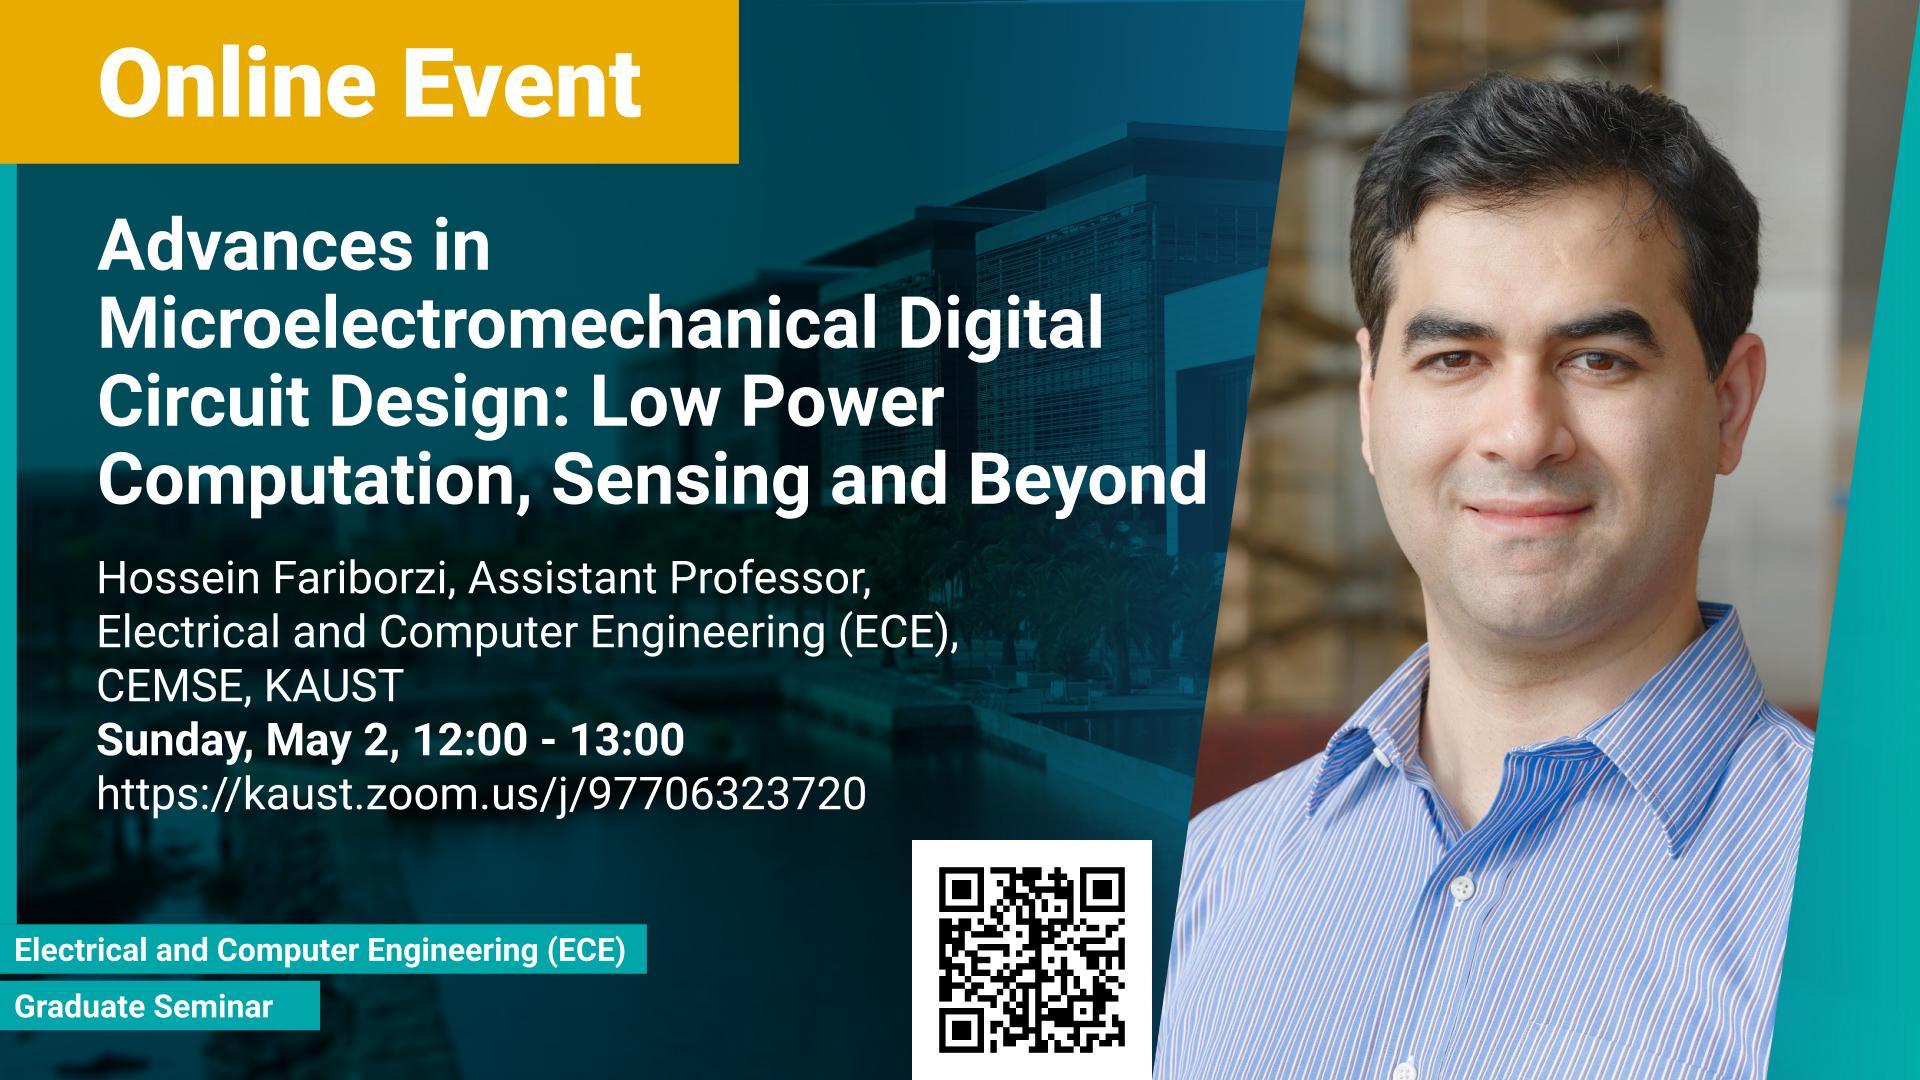 KAUST-CEMSE-ECE-Graduate-Seminar-Hossein Fariborzi-Advances-in-Microelectromechanical-Digital-Circuit-Design-Low-Power-Computation-Sensing-and-Beyond.jpg